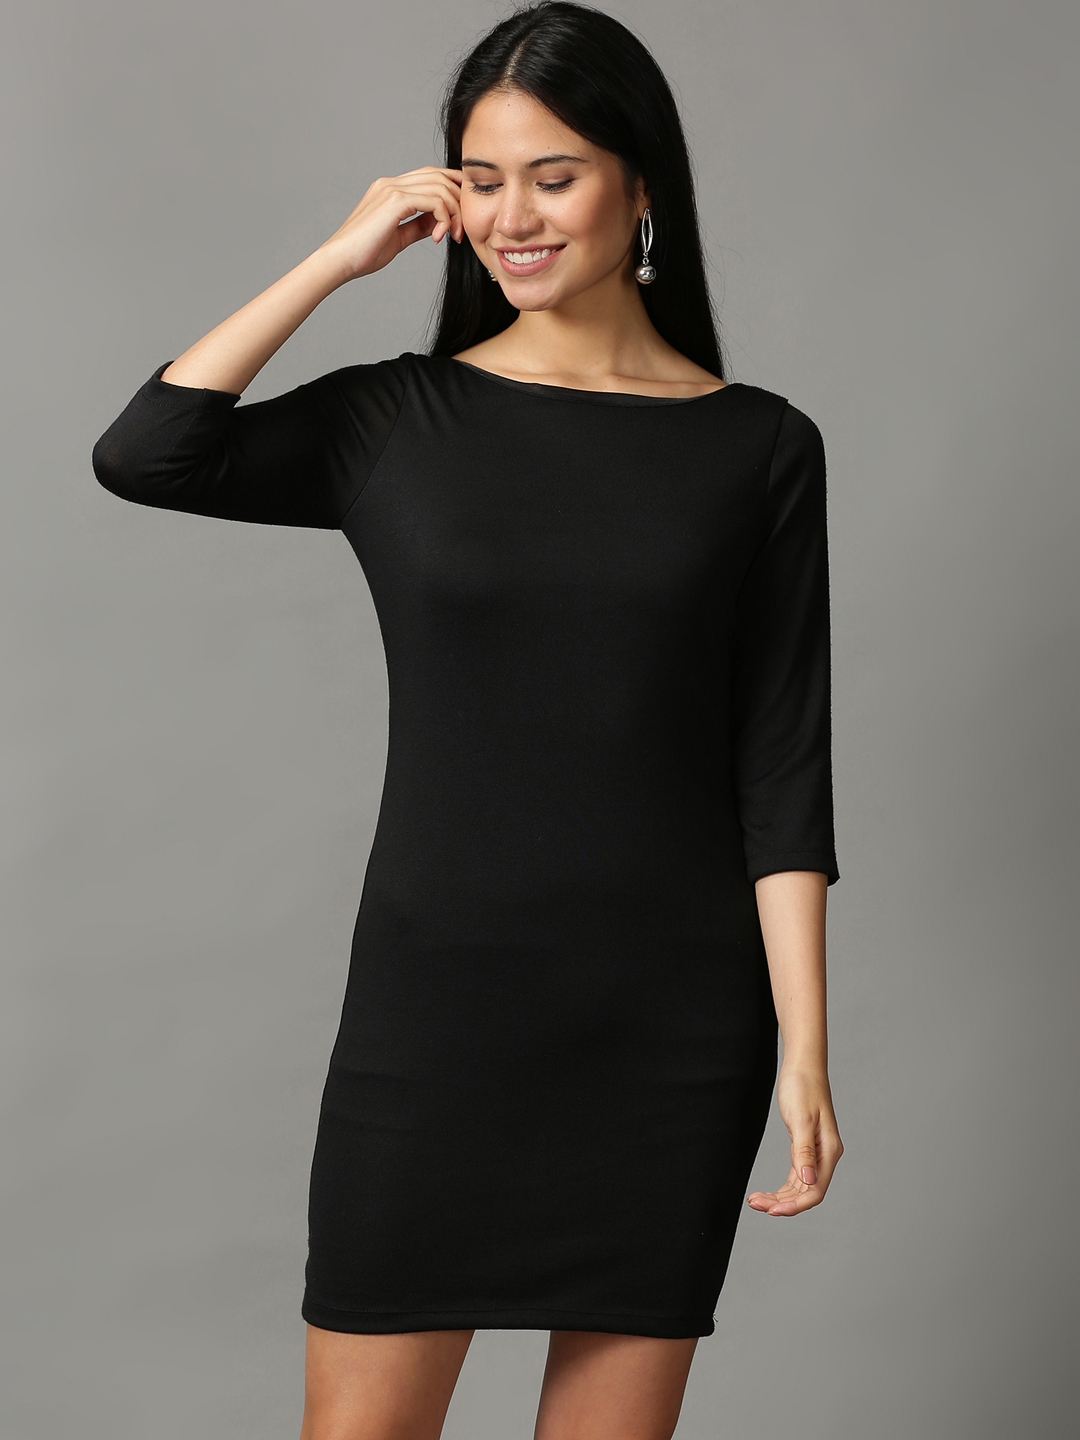 Women's Black Acrylic Solid Dresses